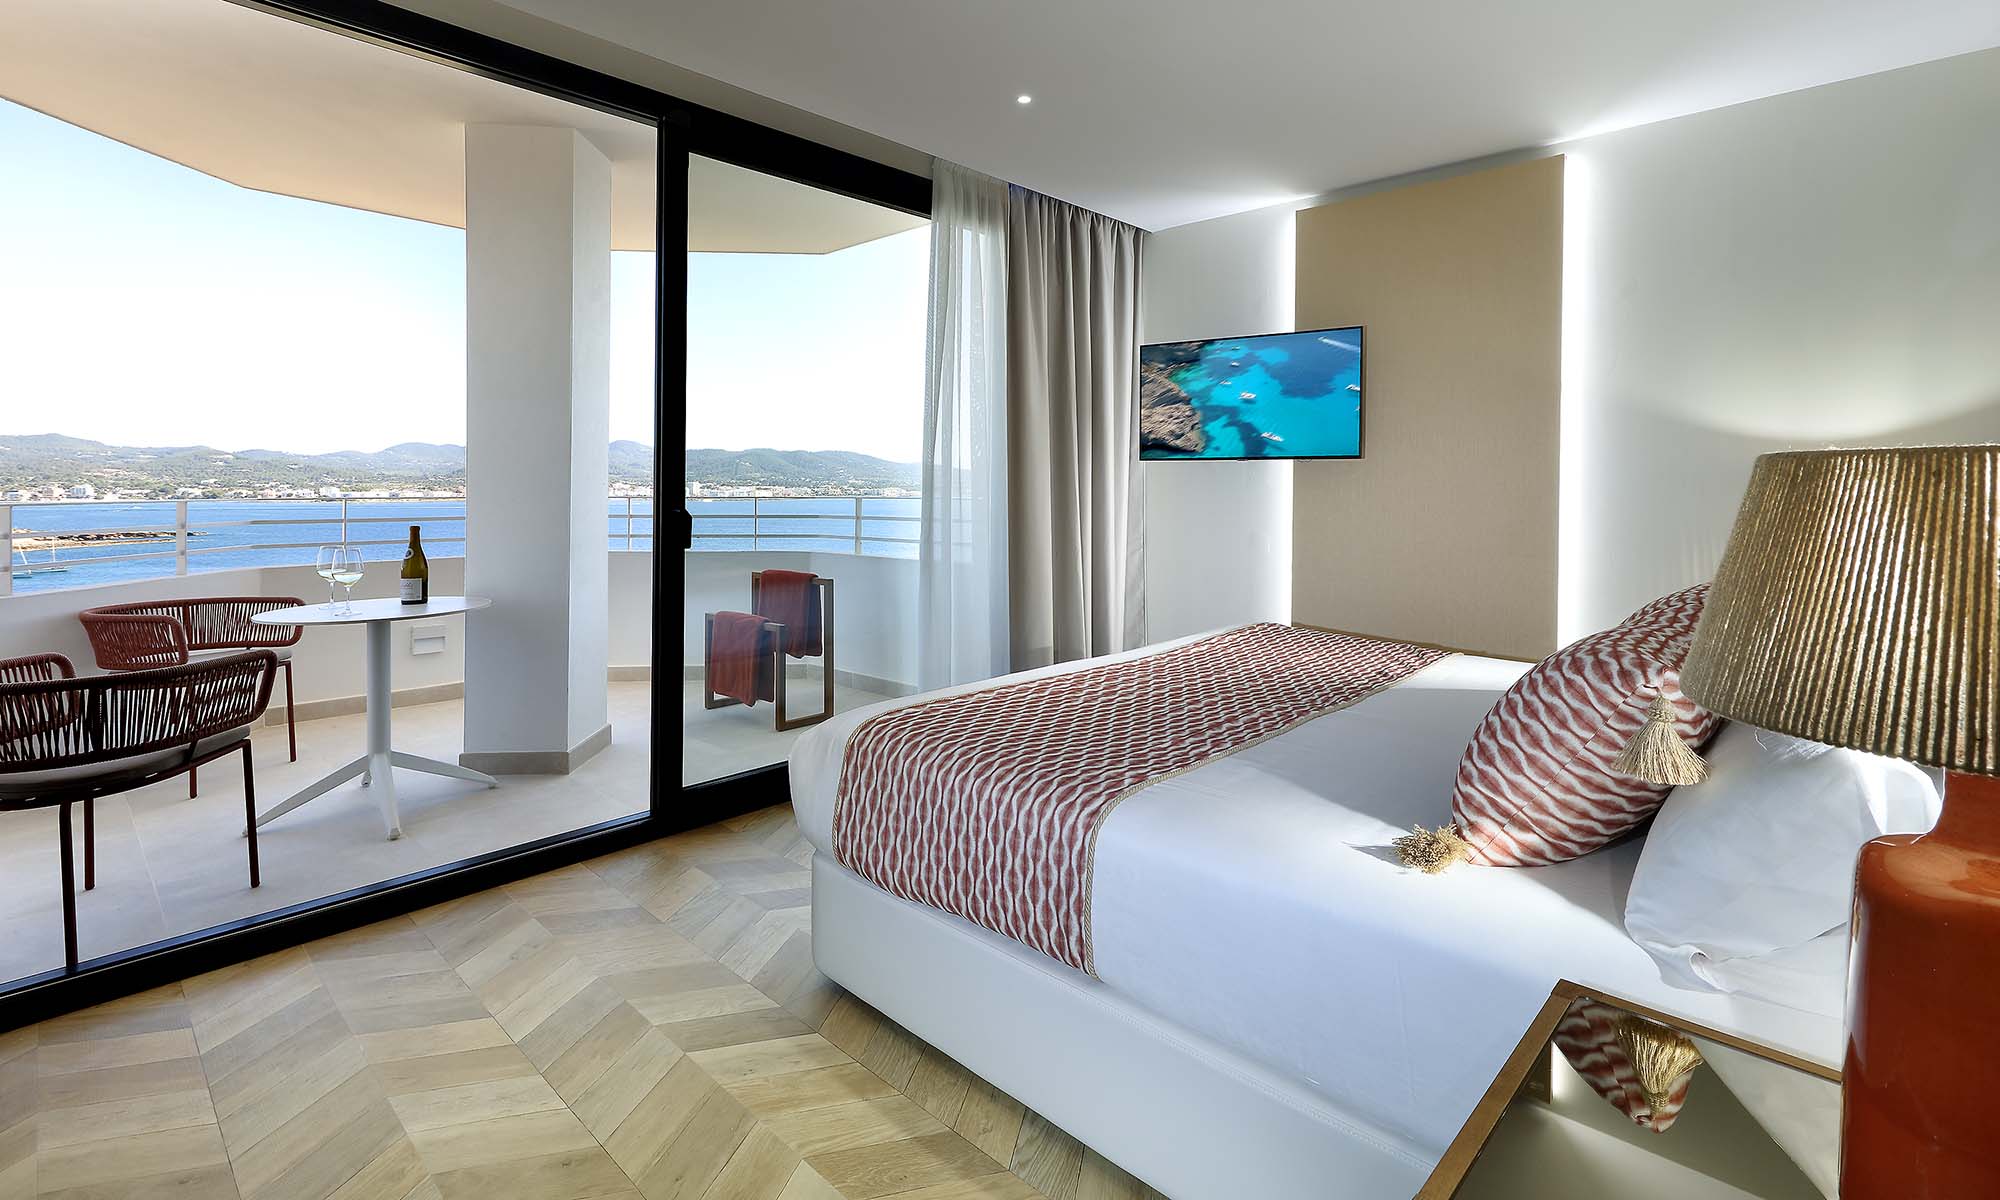 Best Hotels in Ibiza - TRS Ibiza Hotel